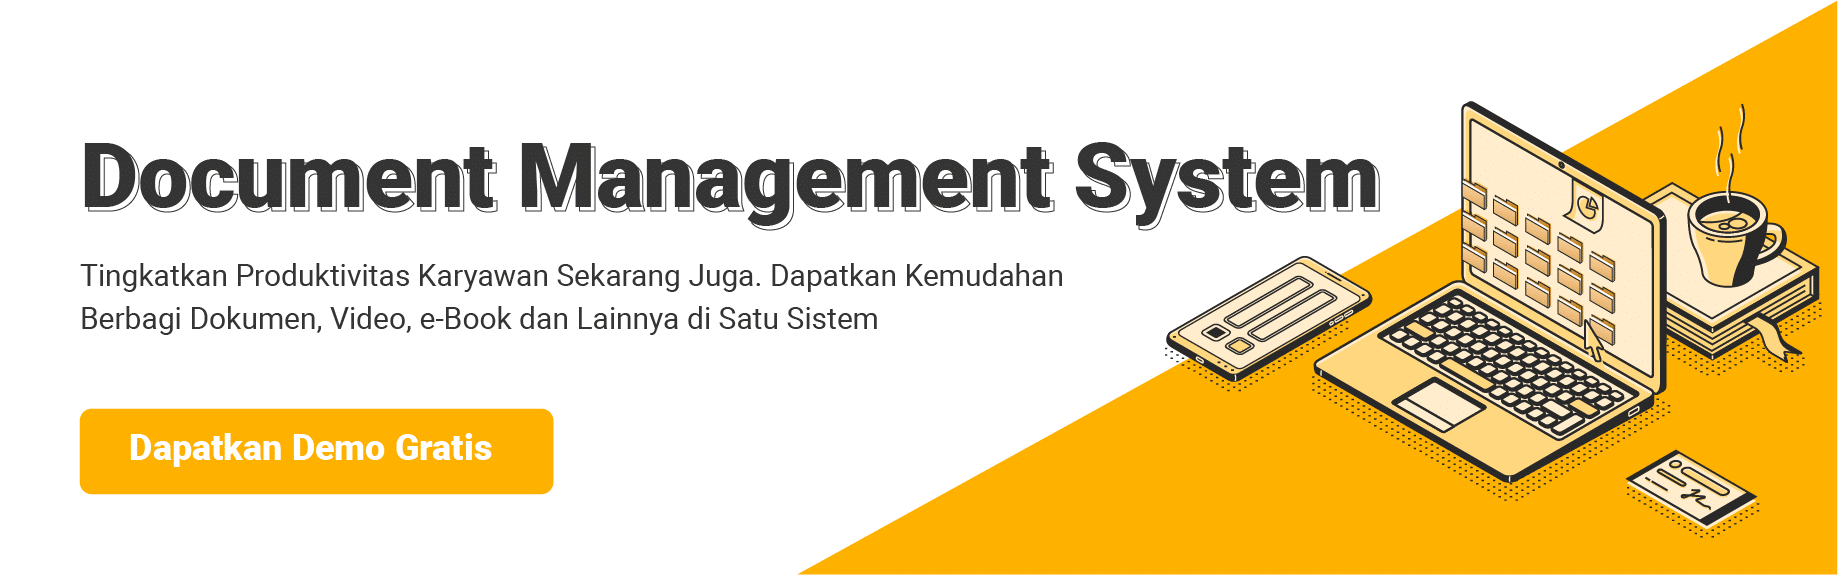 Aplikasi Document Management System